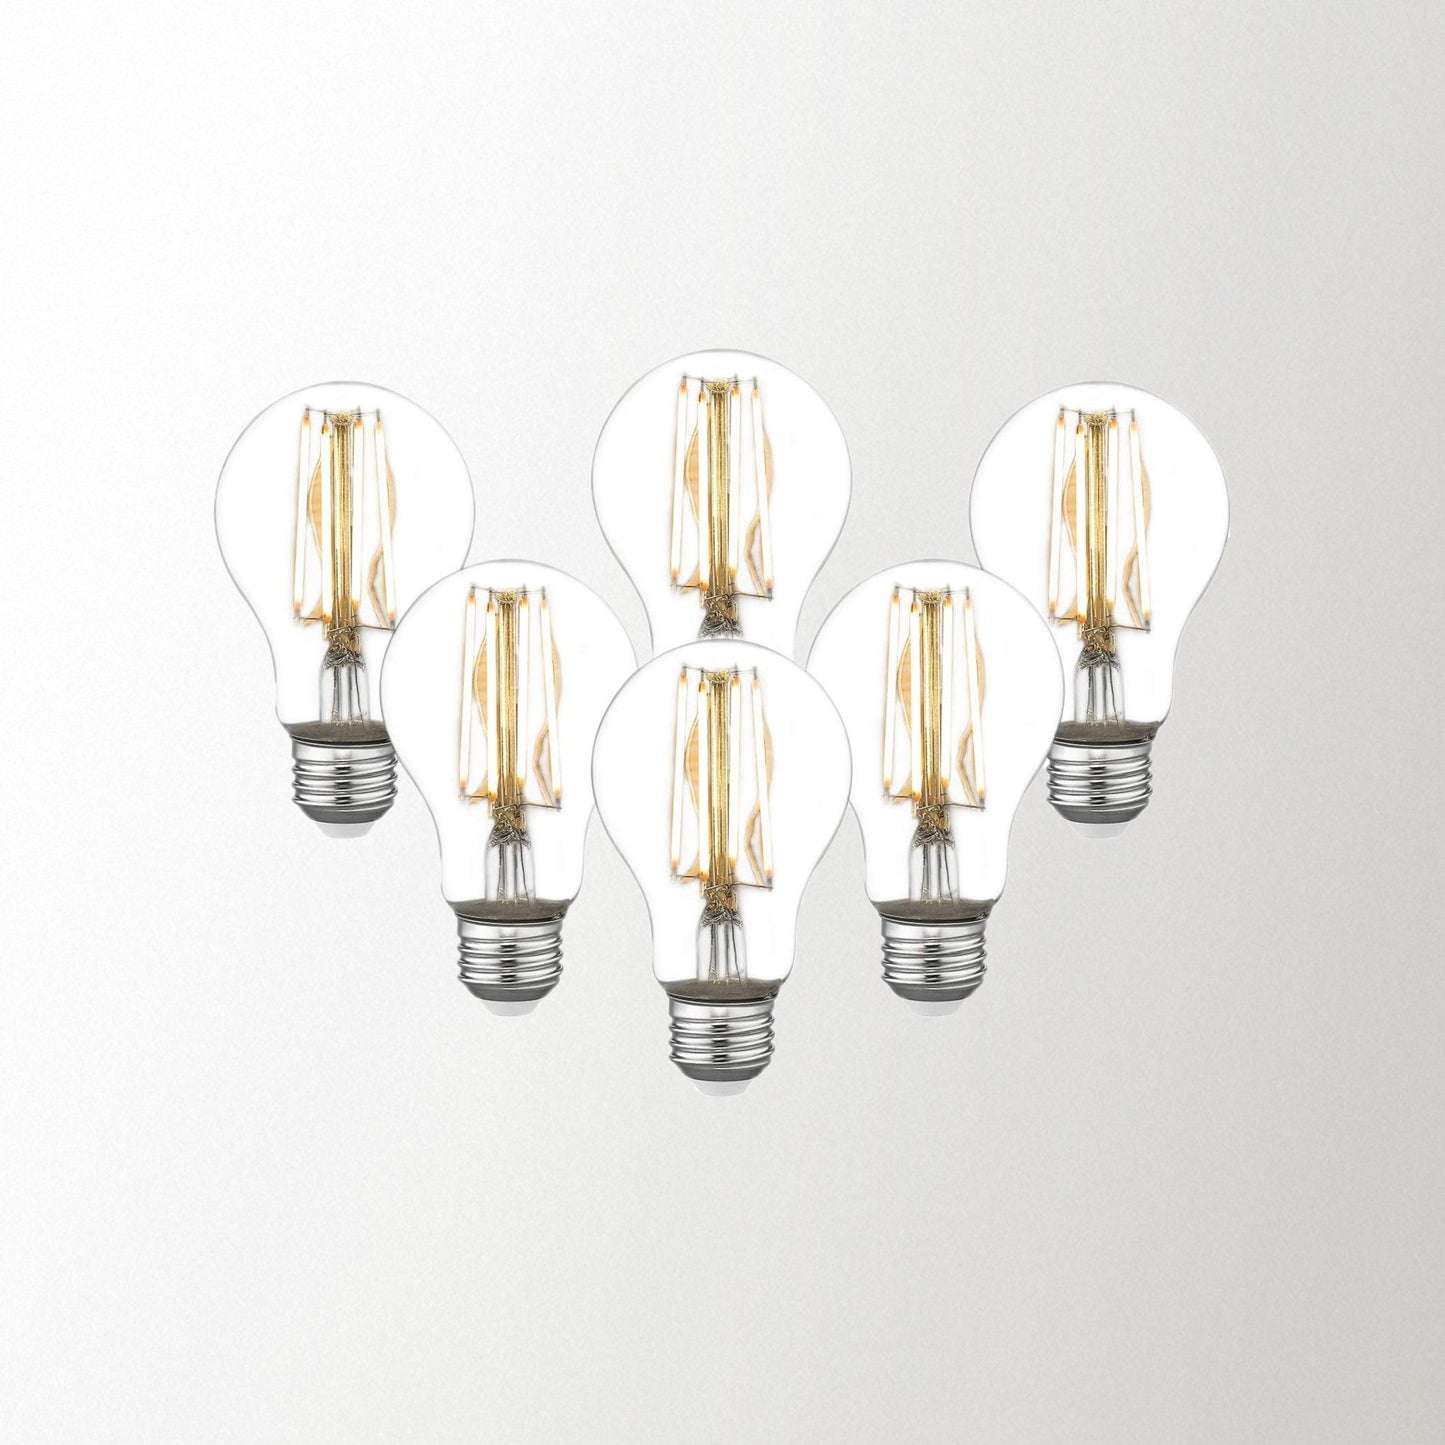 
                  
                    Emliviar Vintage LED Light Bulb 6W, A19 LED Edison Bulb, Pack of 6,A19-LED
                  
                